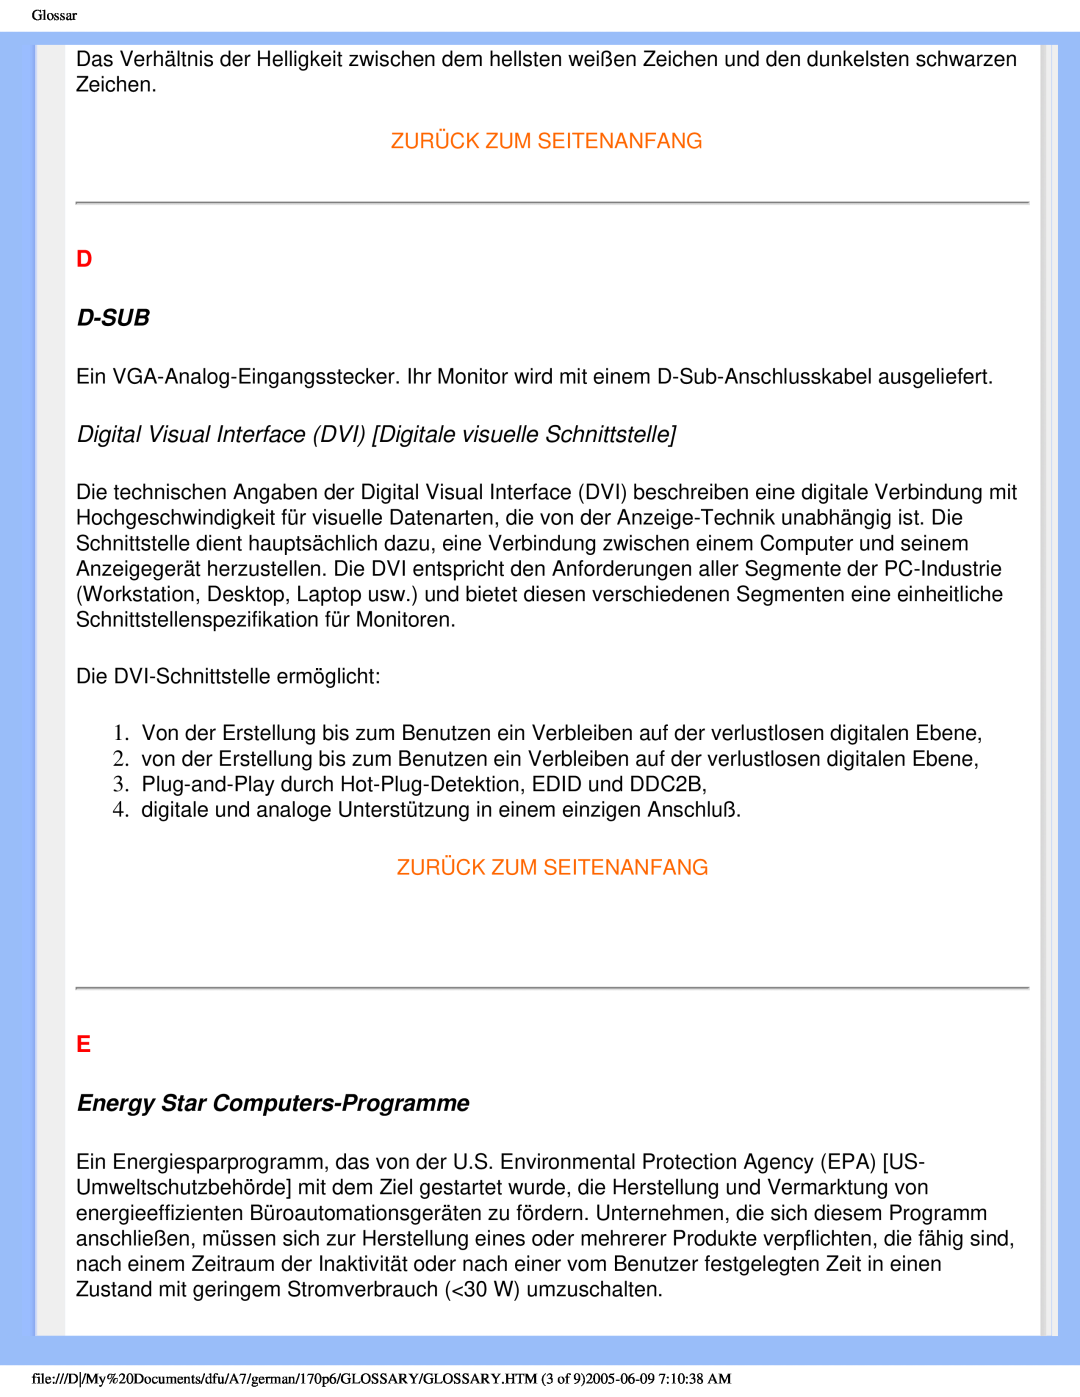 Philips 170p6 user manual D-Sub, Energy Star Computers-Programme, Zurück Zum Seitenanfang 